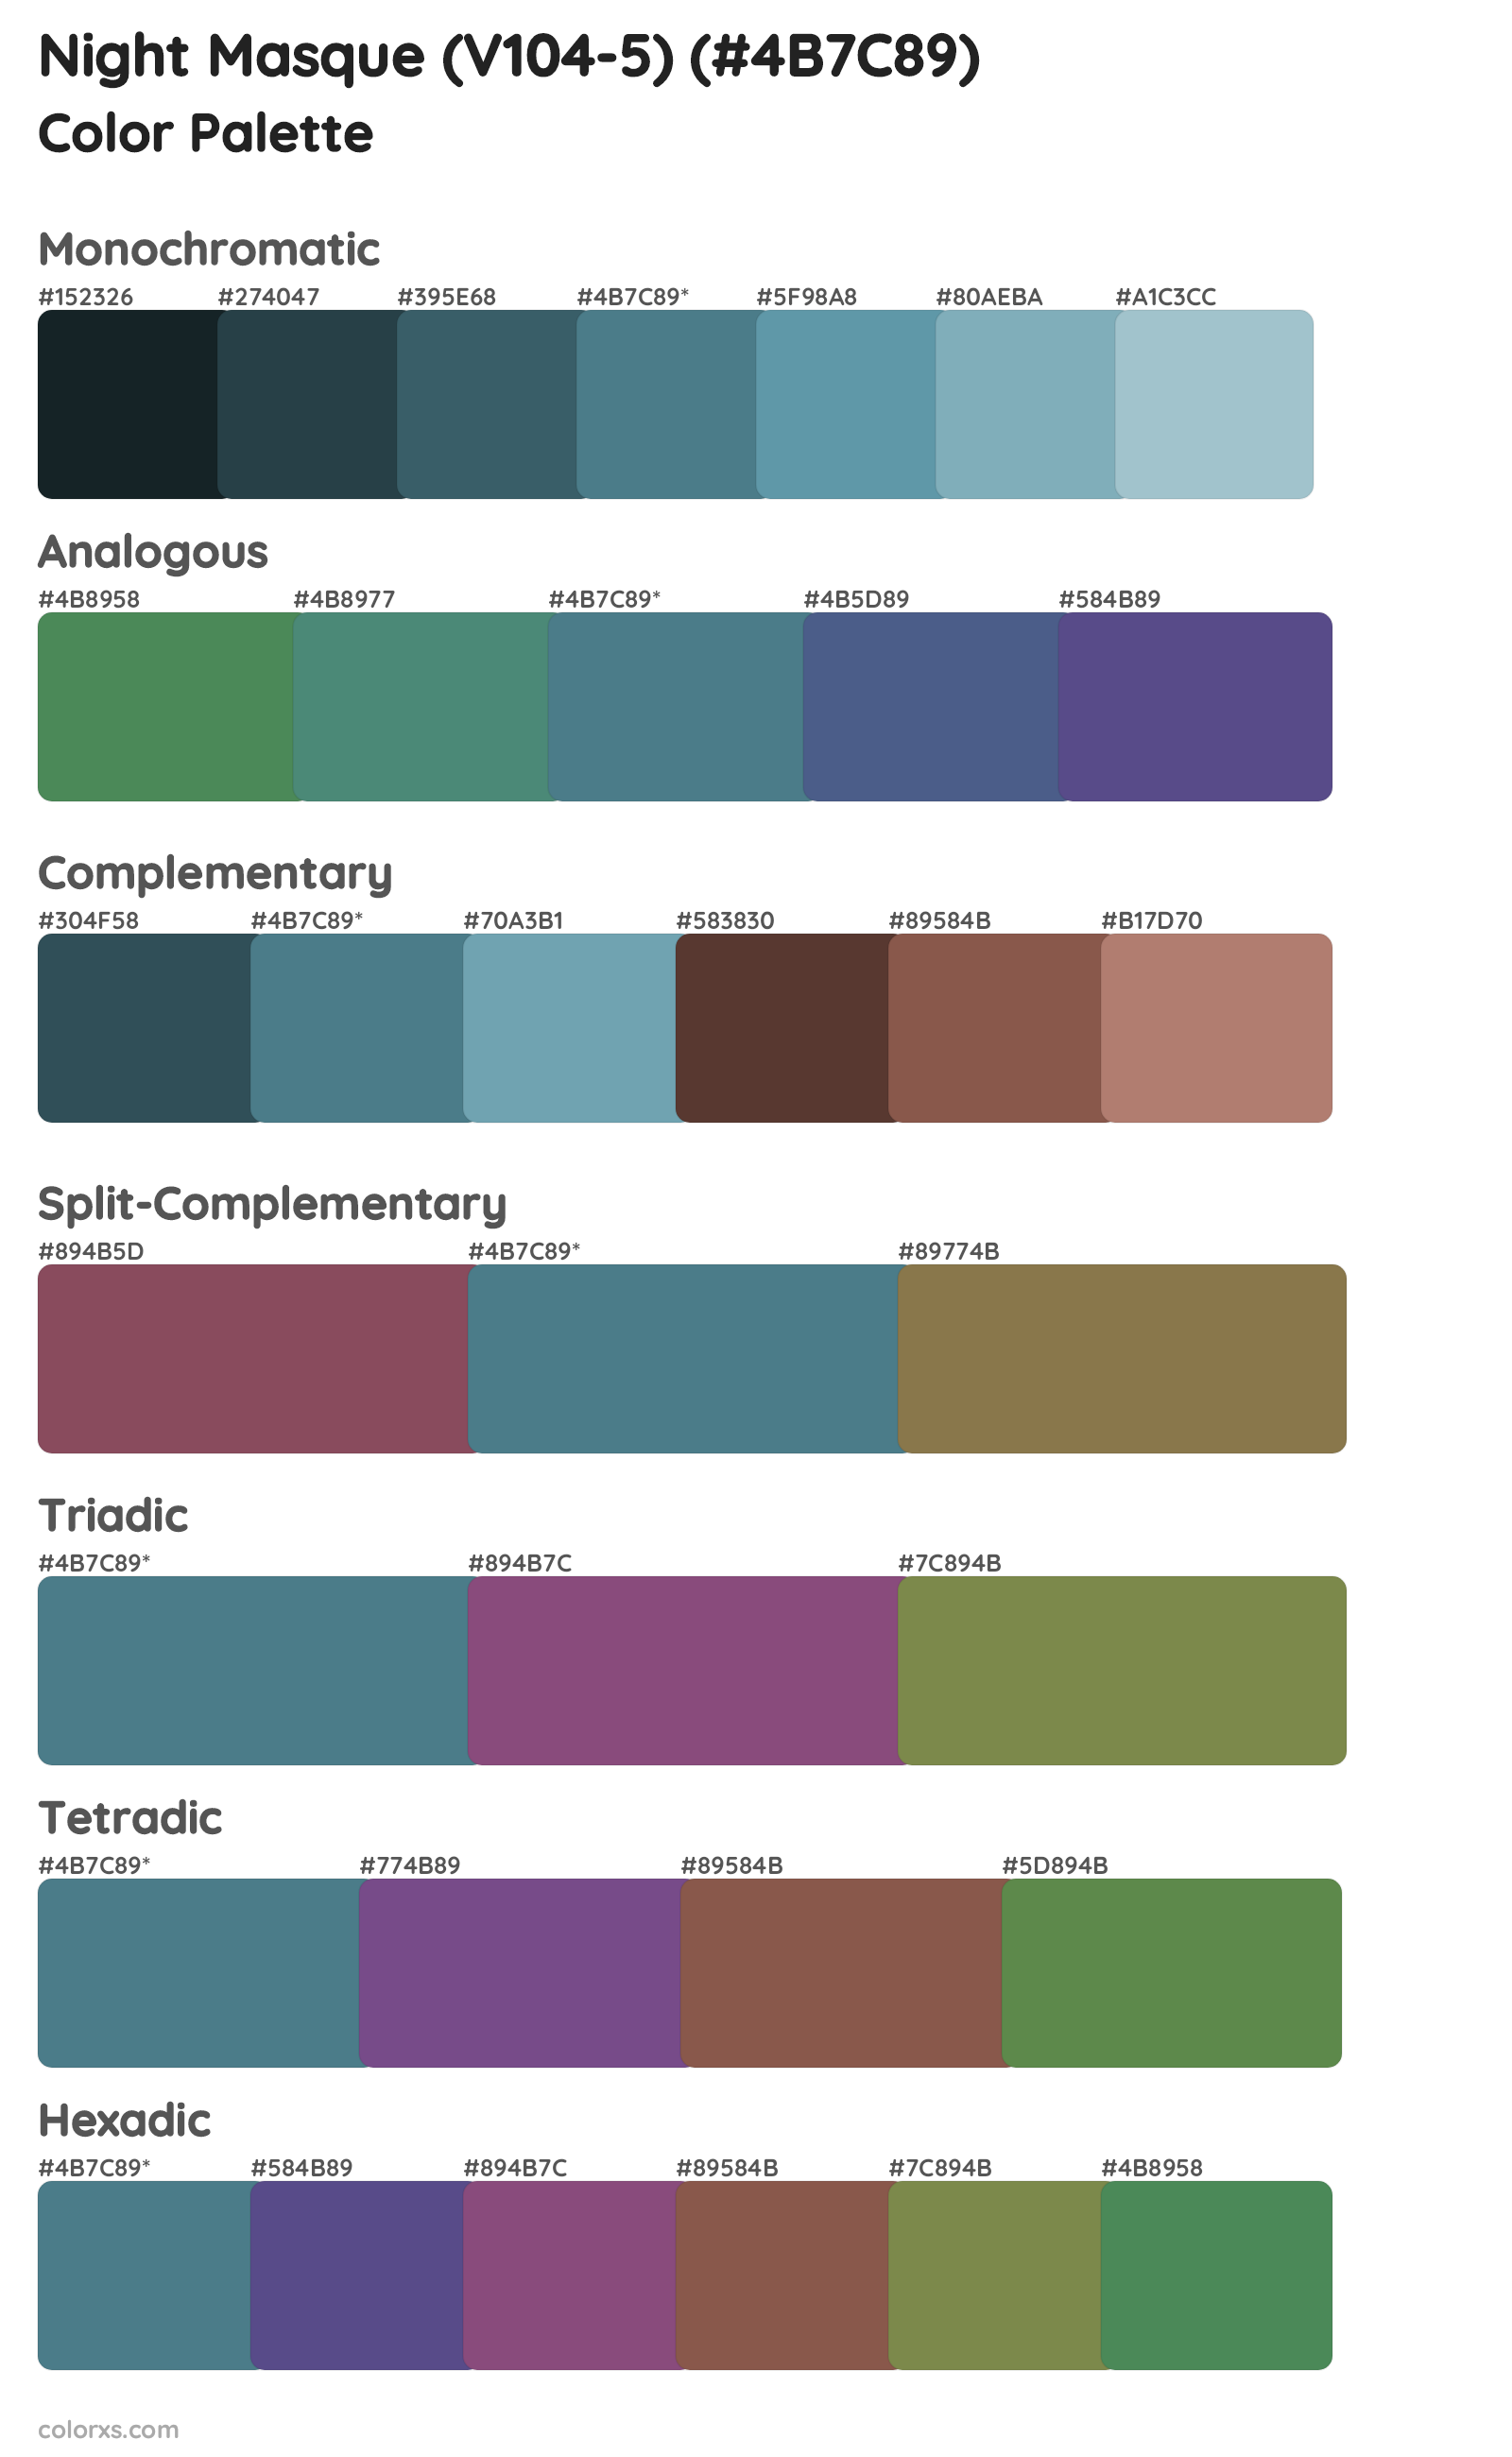 Night Masque (V104-5) Color Scheme Palettes